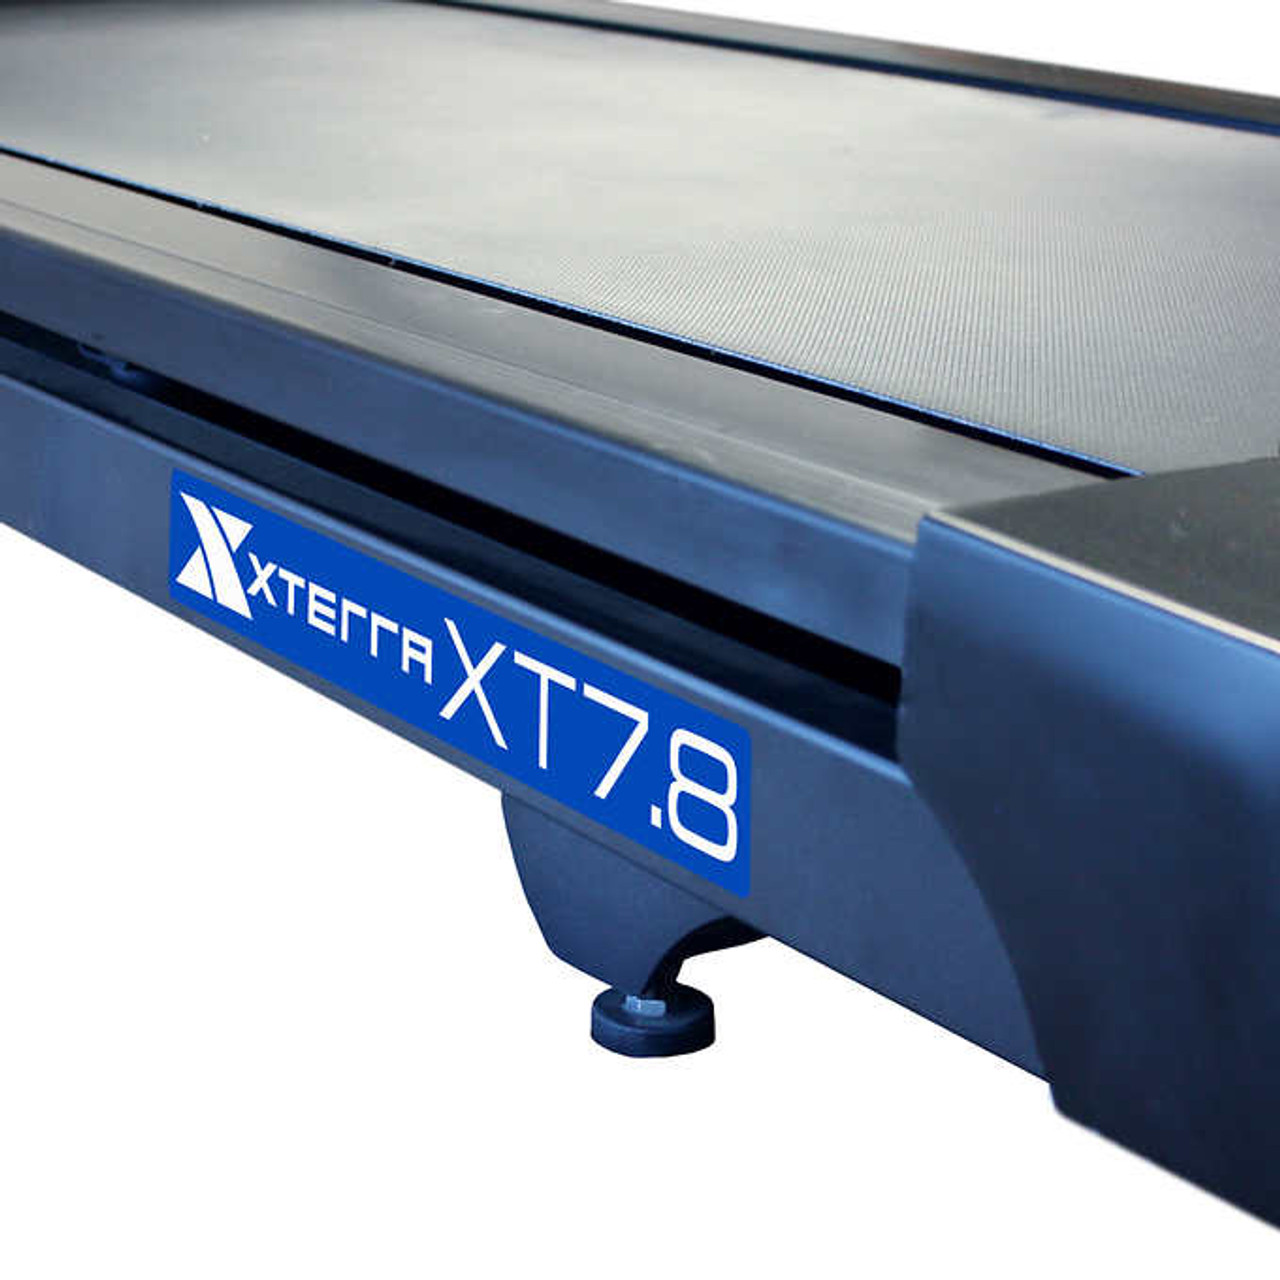 Xterra XT7.8 Folding Treadmill - 3.5 HP, 0.8 – 19 kph Speed, 12 Incline Levels - Chicken Pieces